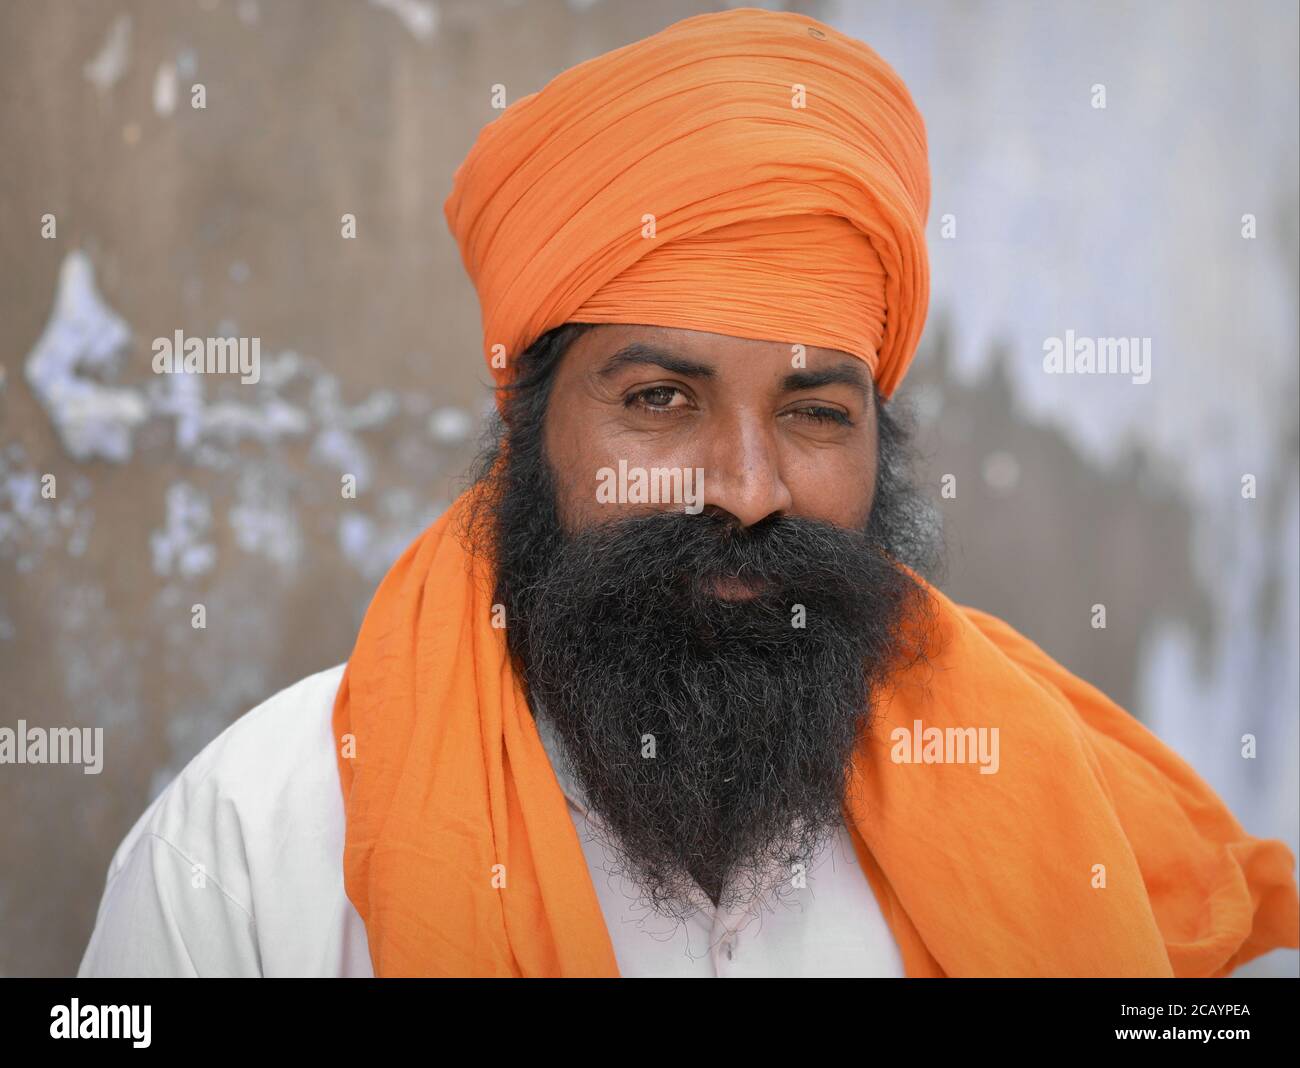 Big middle-aged Indian Sikh man with orange turban (dastar) and orange shawl looks at the camera. Stock Photo